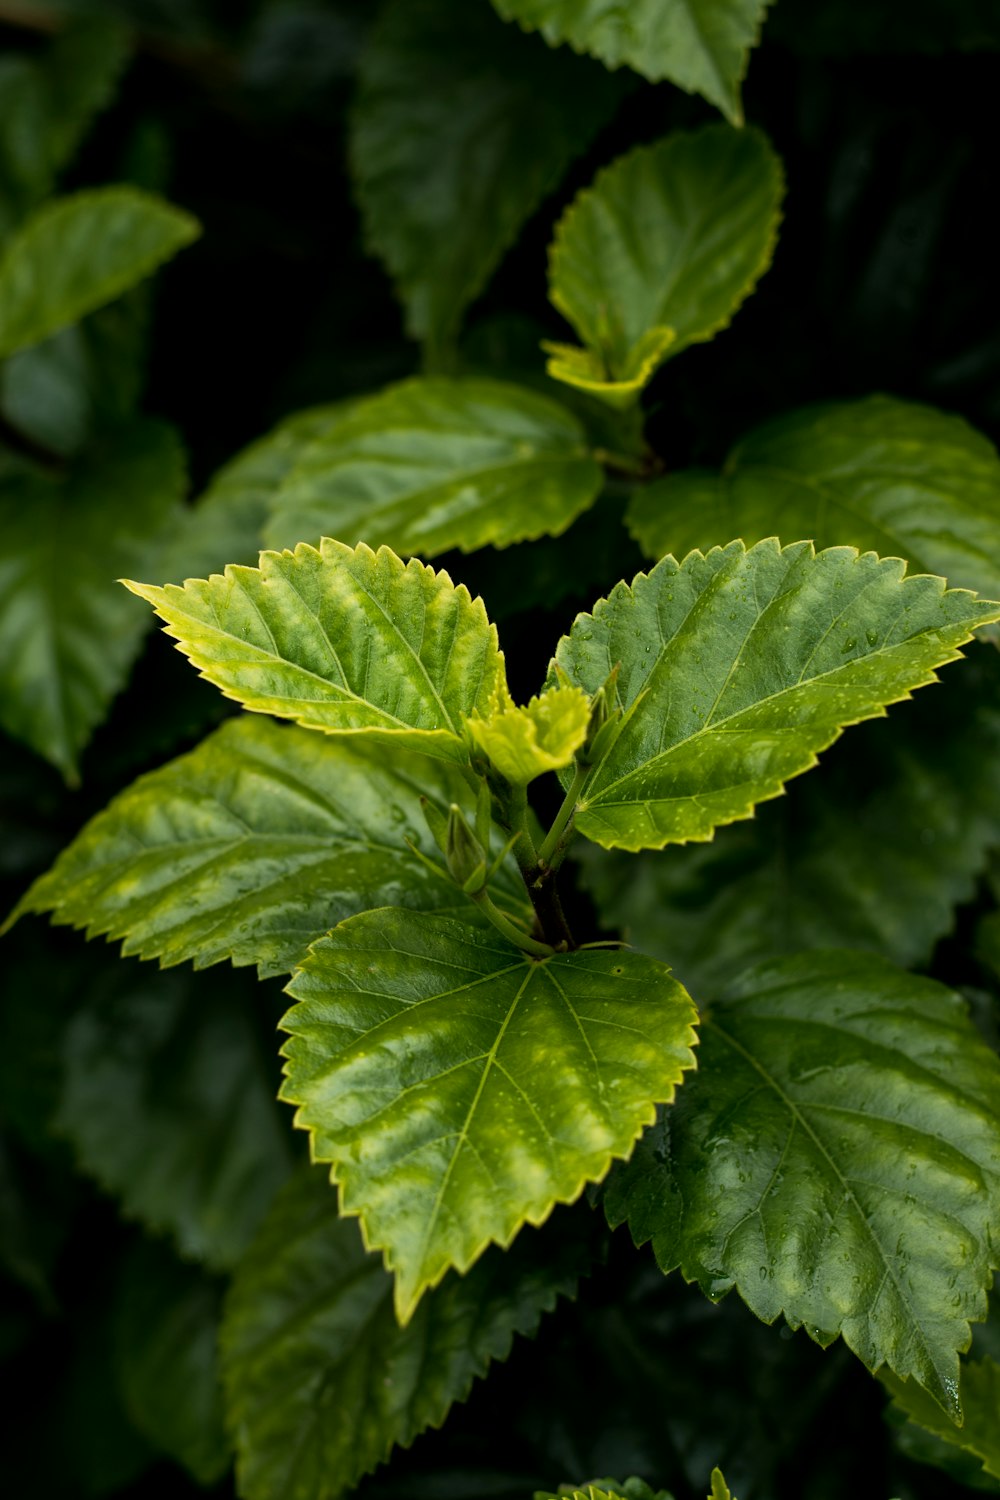 ovate leafed plant